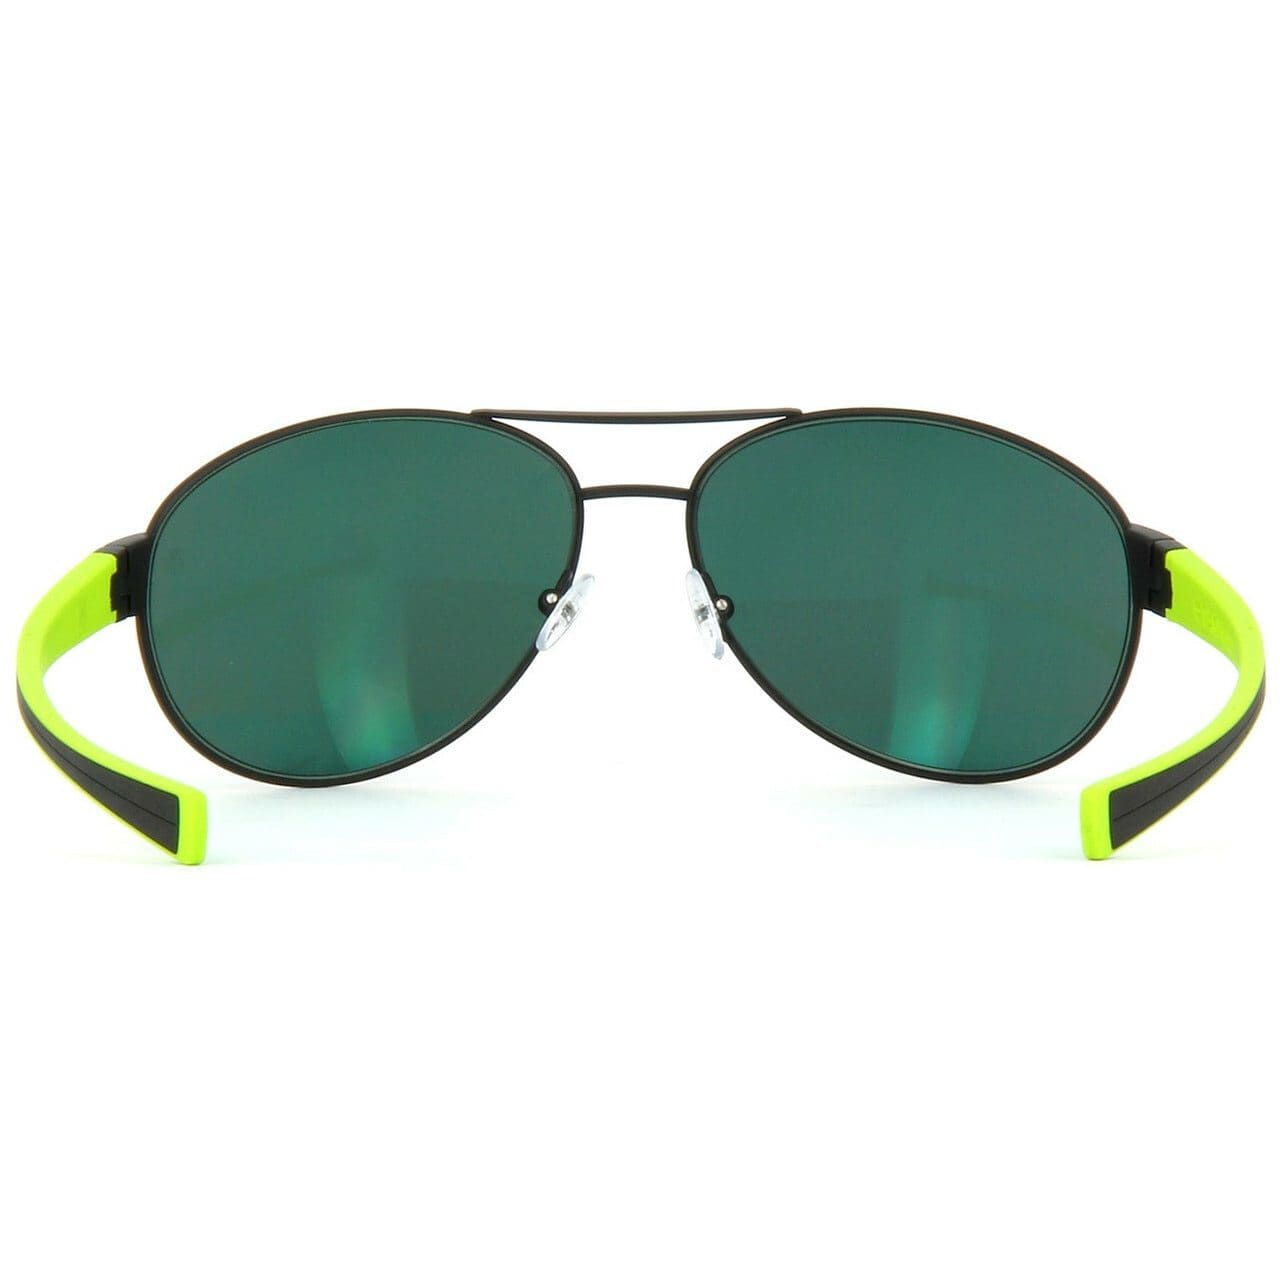 TAG Heuer LRS 0253 309 Black / Green 62mm Polarized Green Lens Aviator Sunglasses 660253309621603